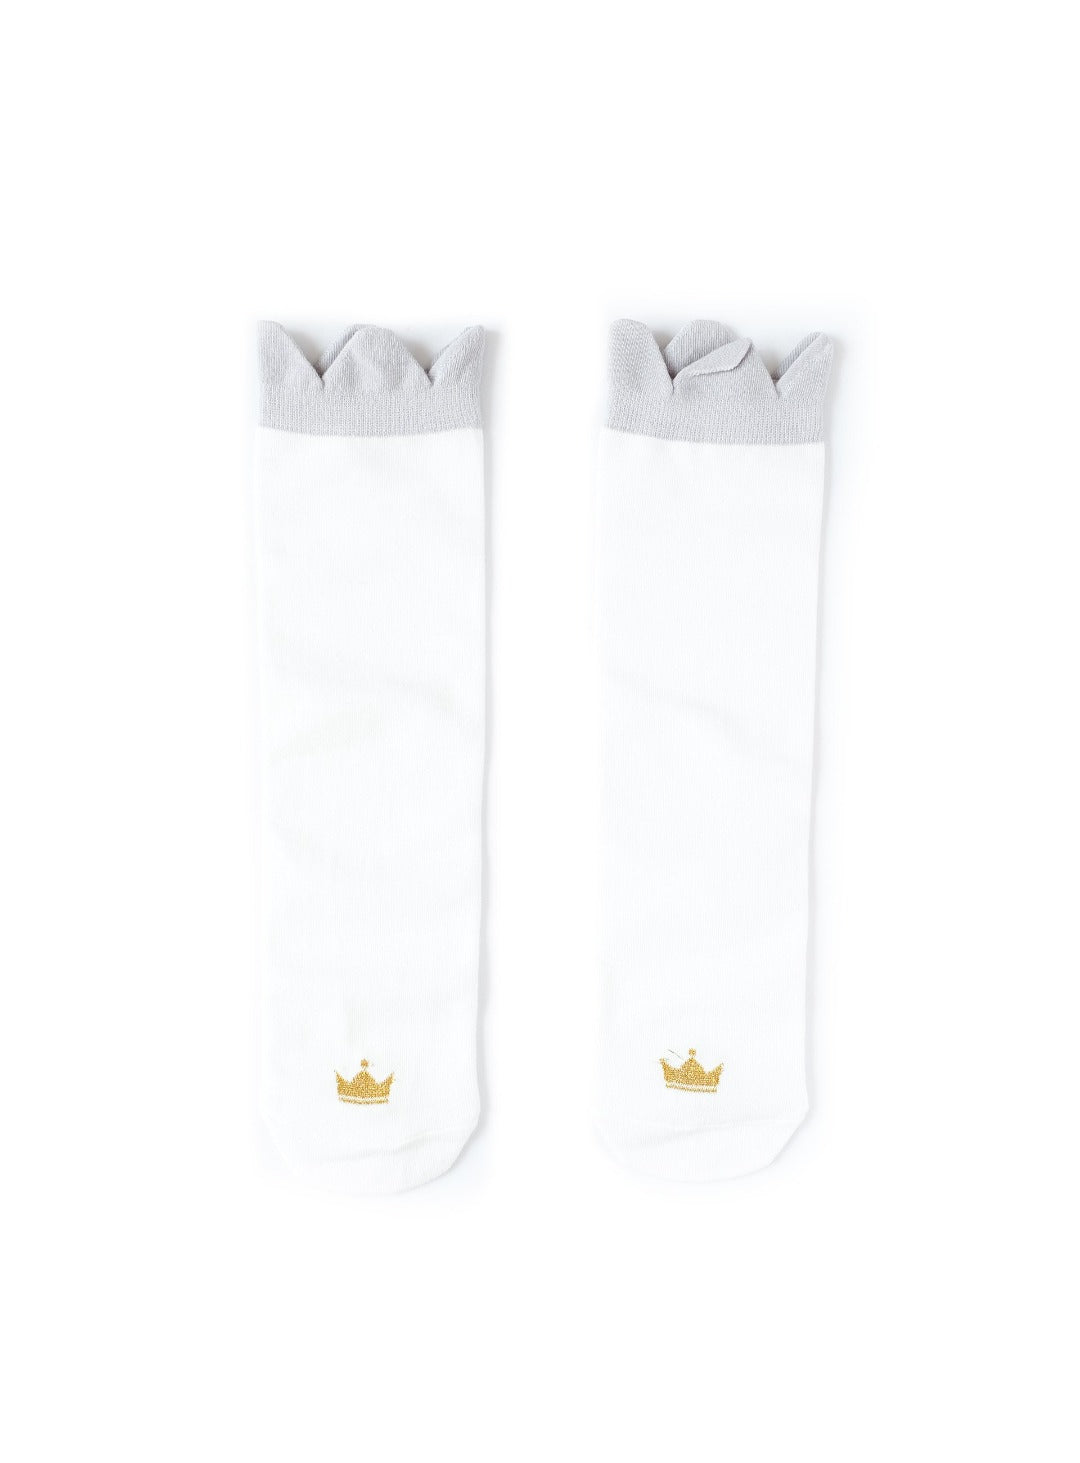 midi length white socks gray crowned edge